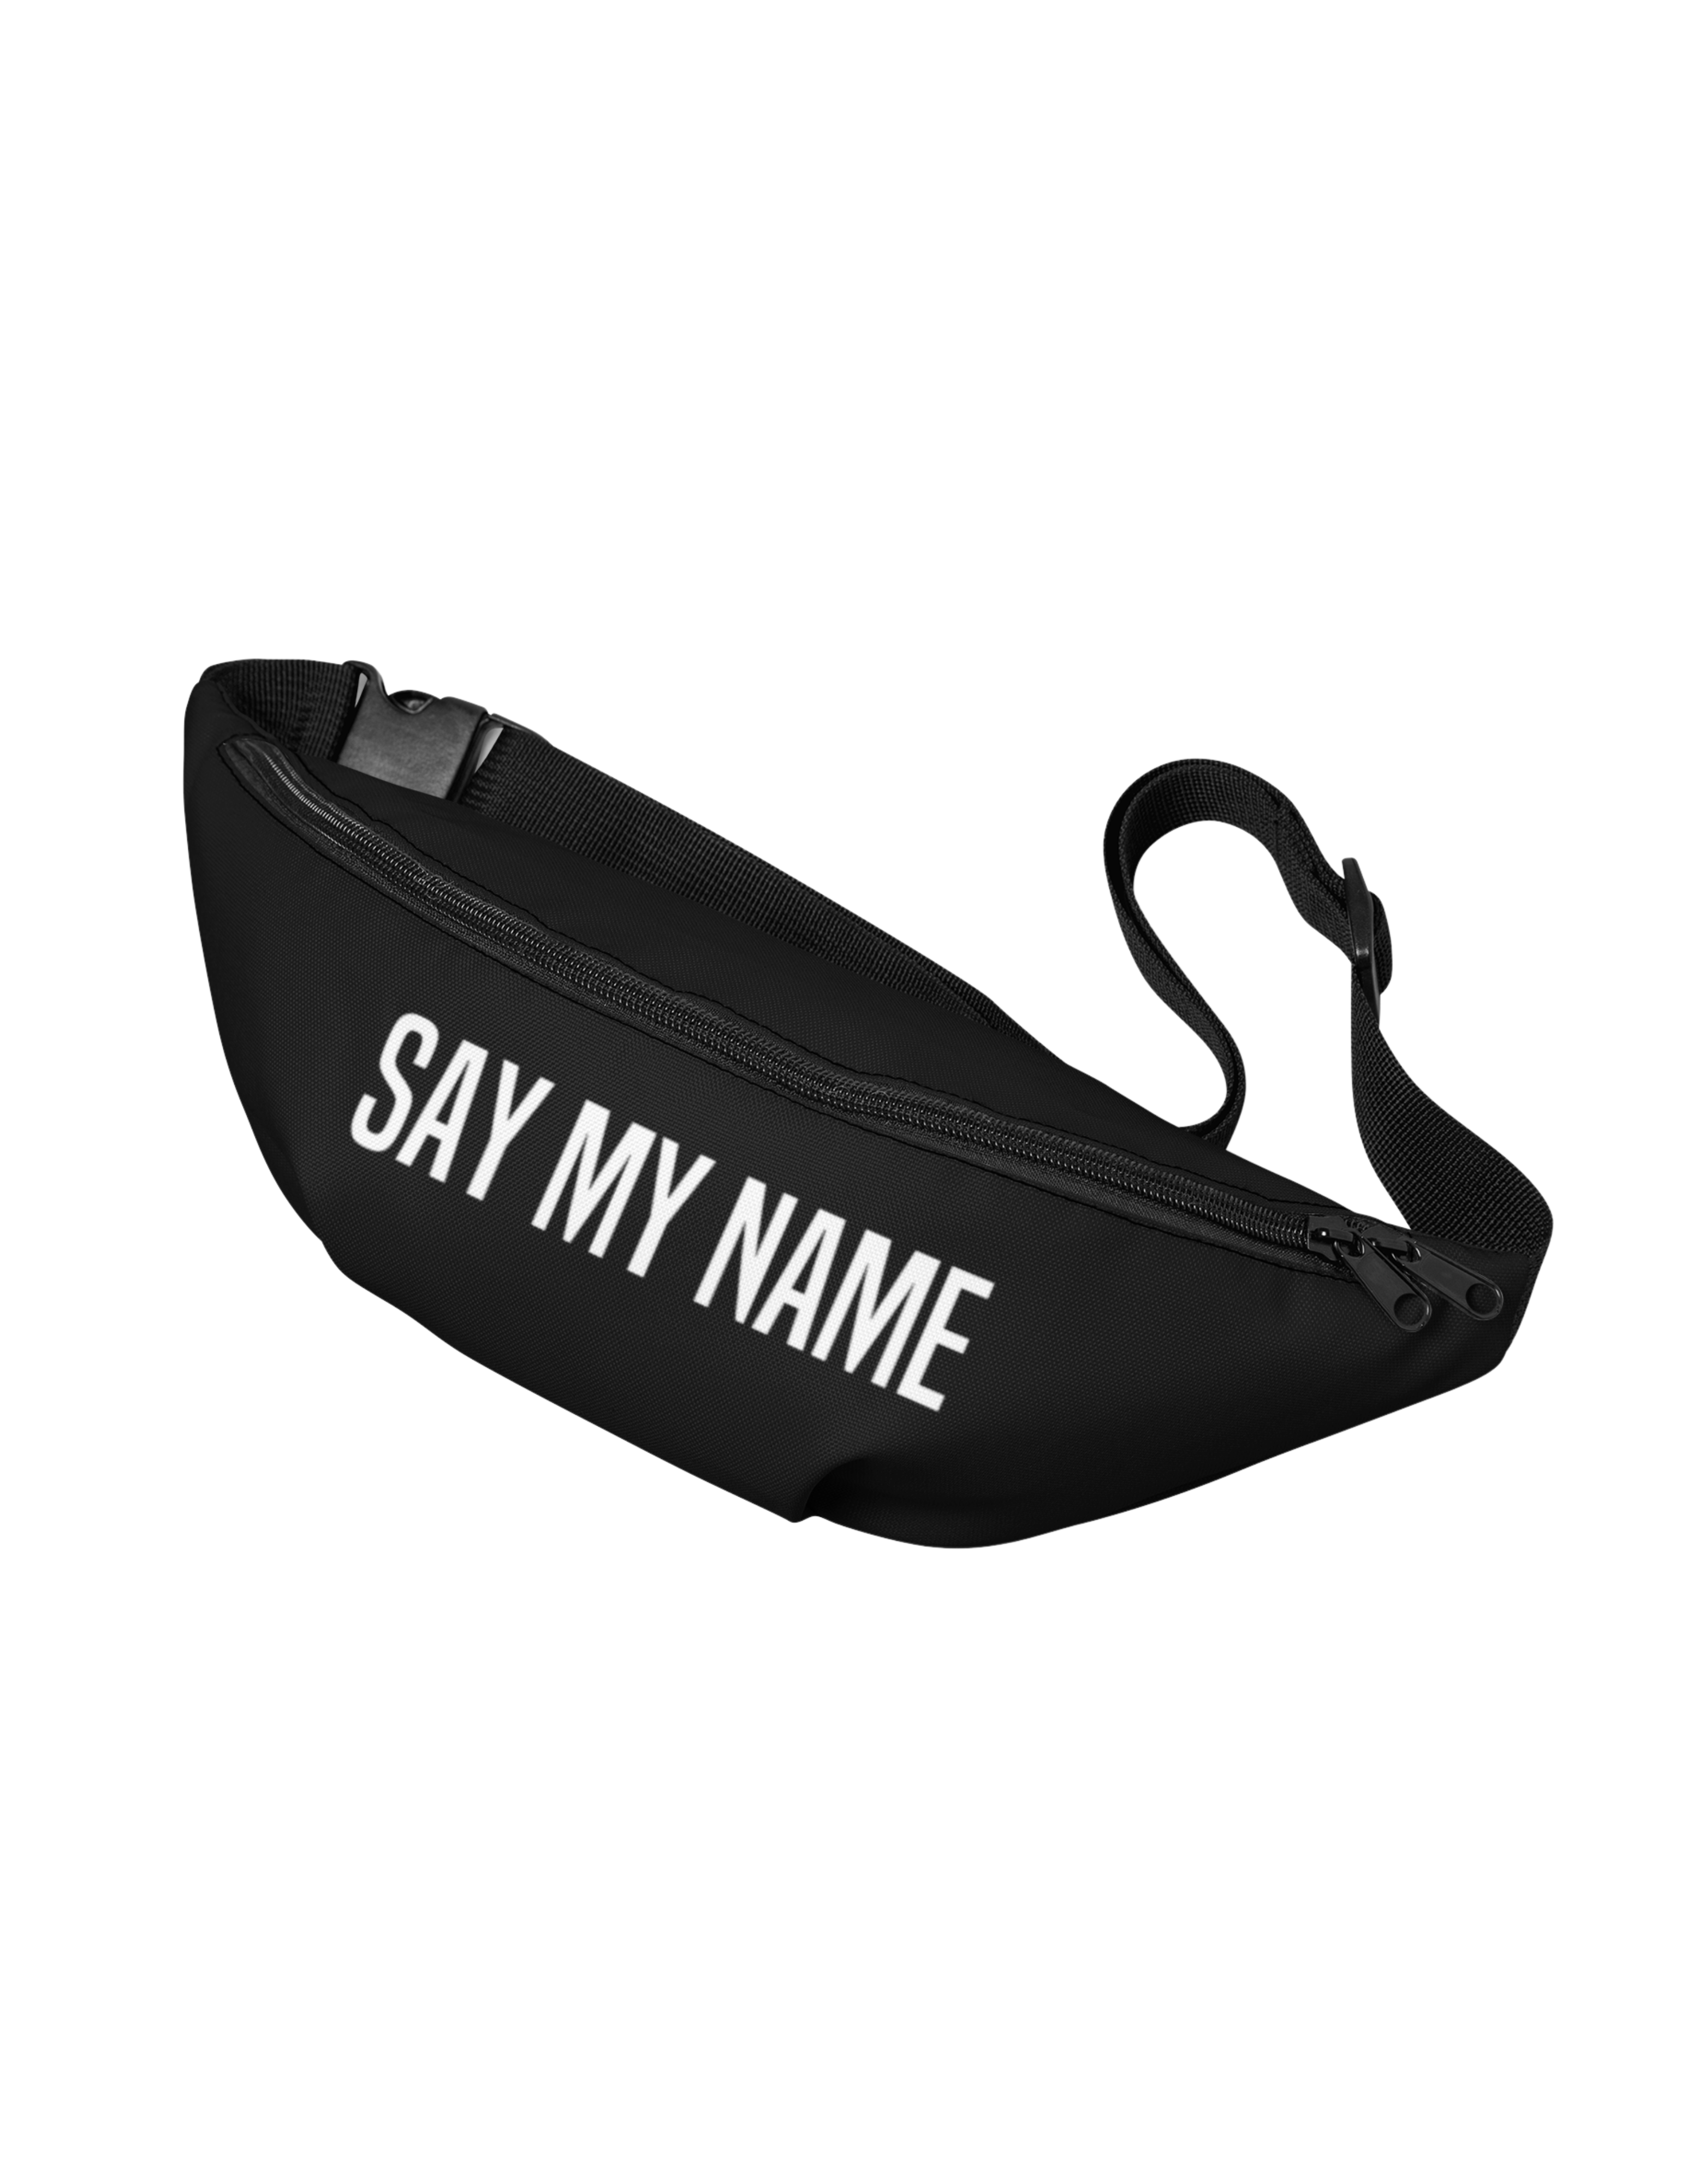 CSG "SAY MY NAME" belt bag